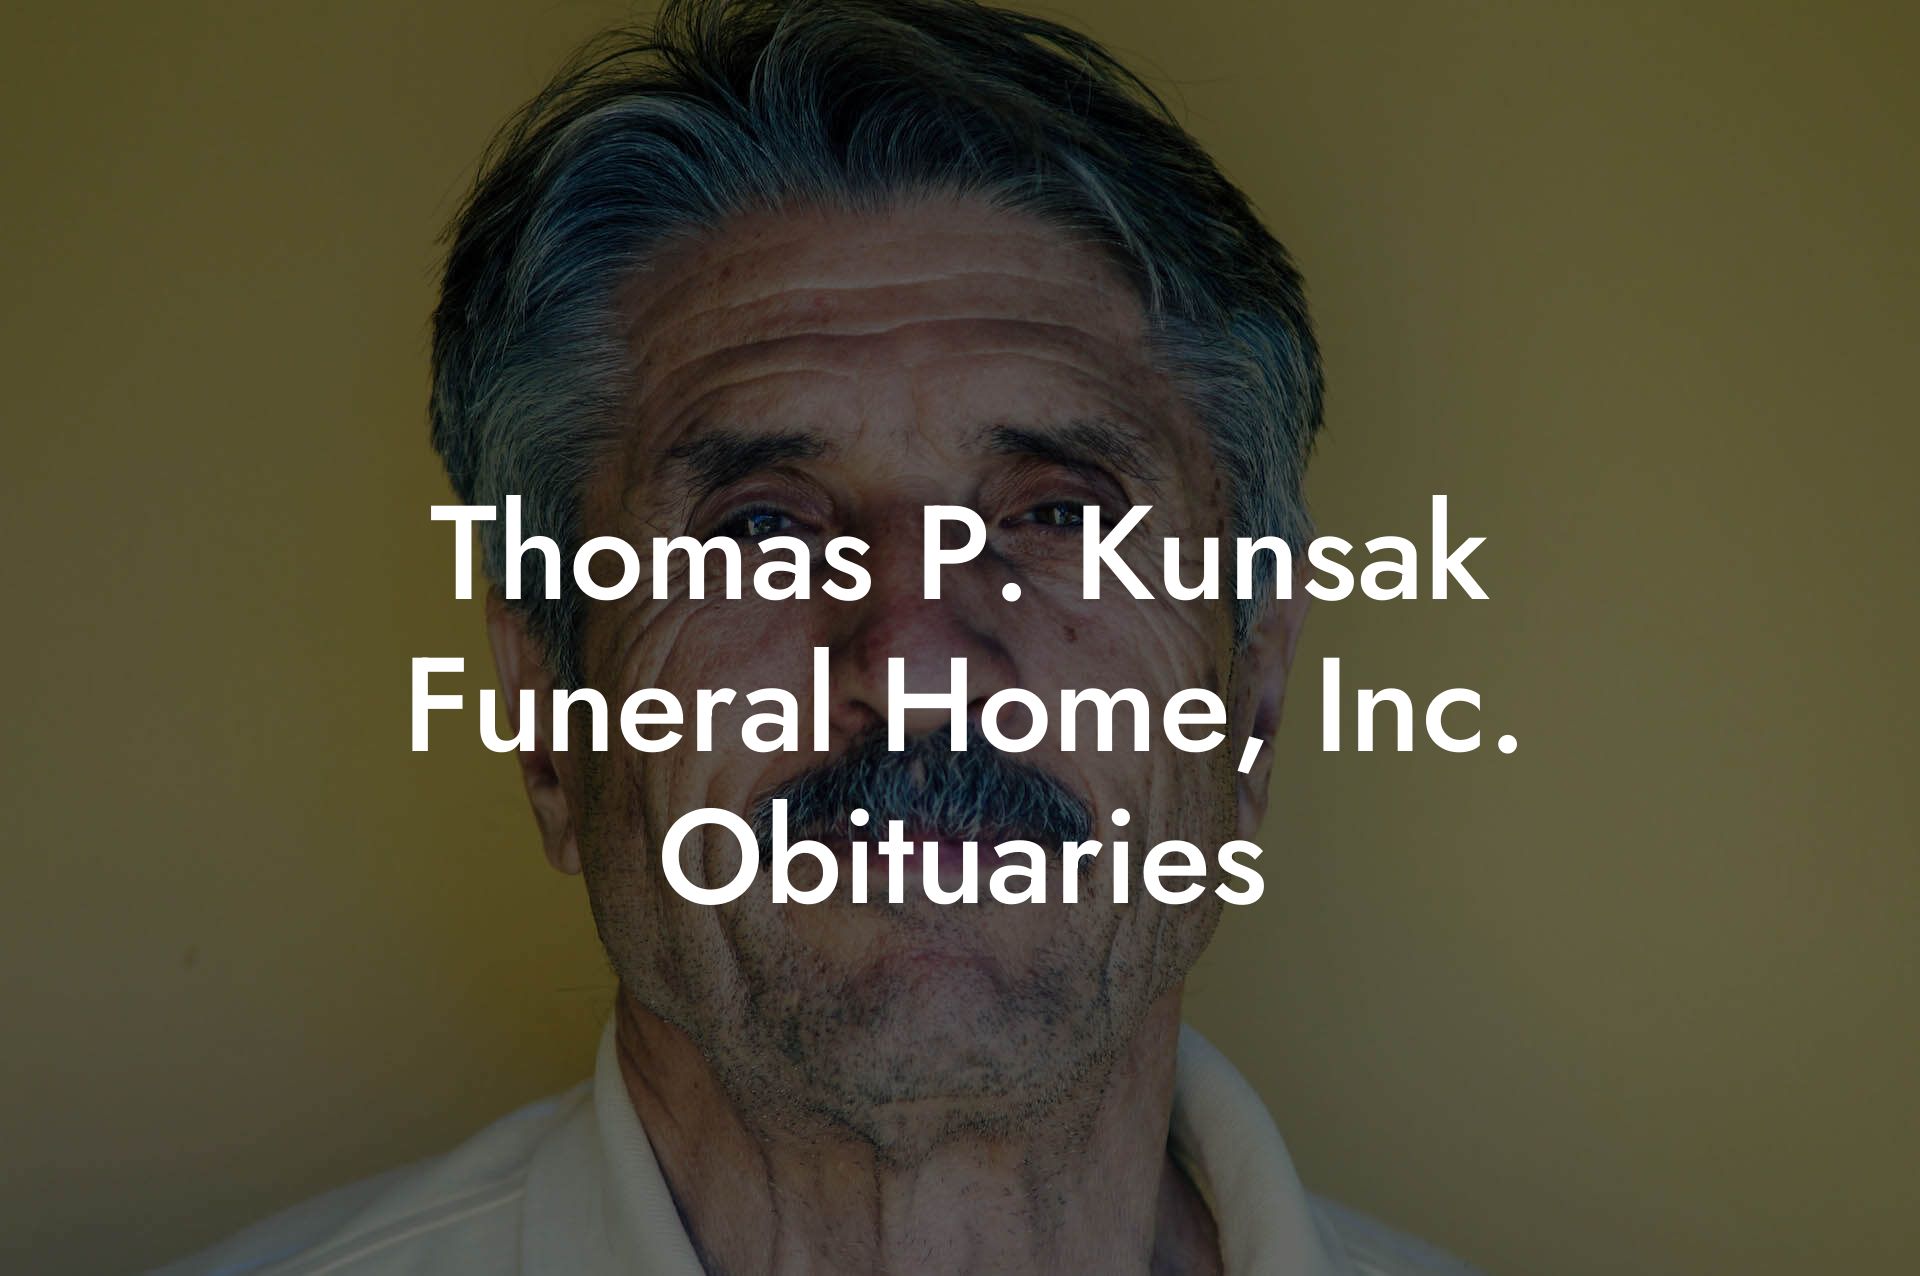 Thomas P. Kunsak Funeral Home, Inc. Obituaries